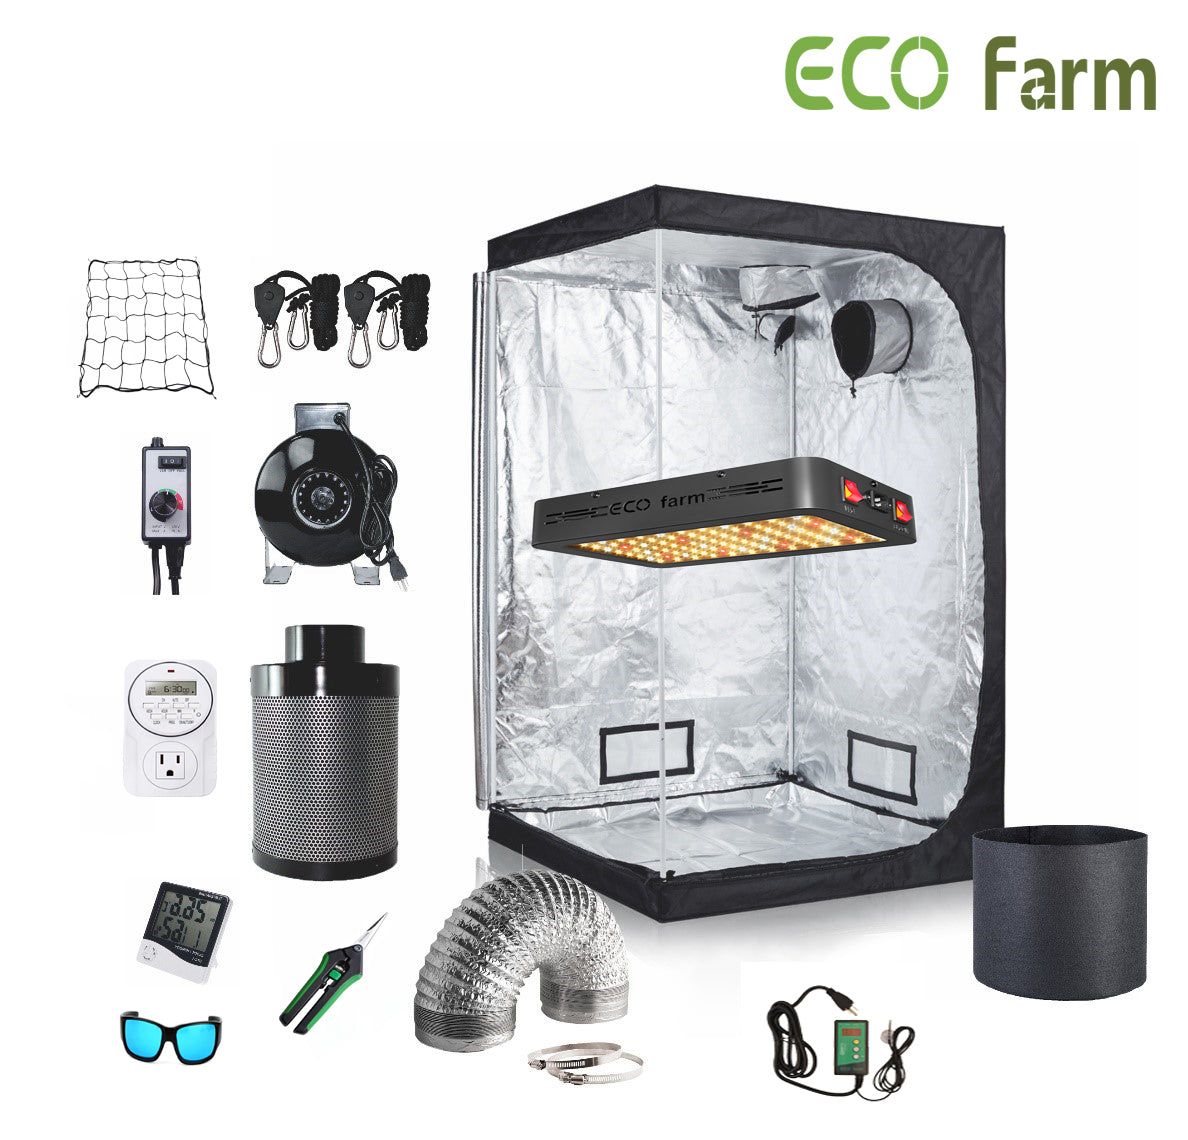 ECO Farm 4*2FT(48*24*60inch)DIY Grow Package